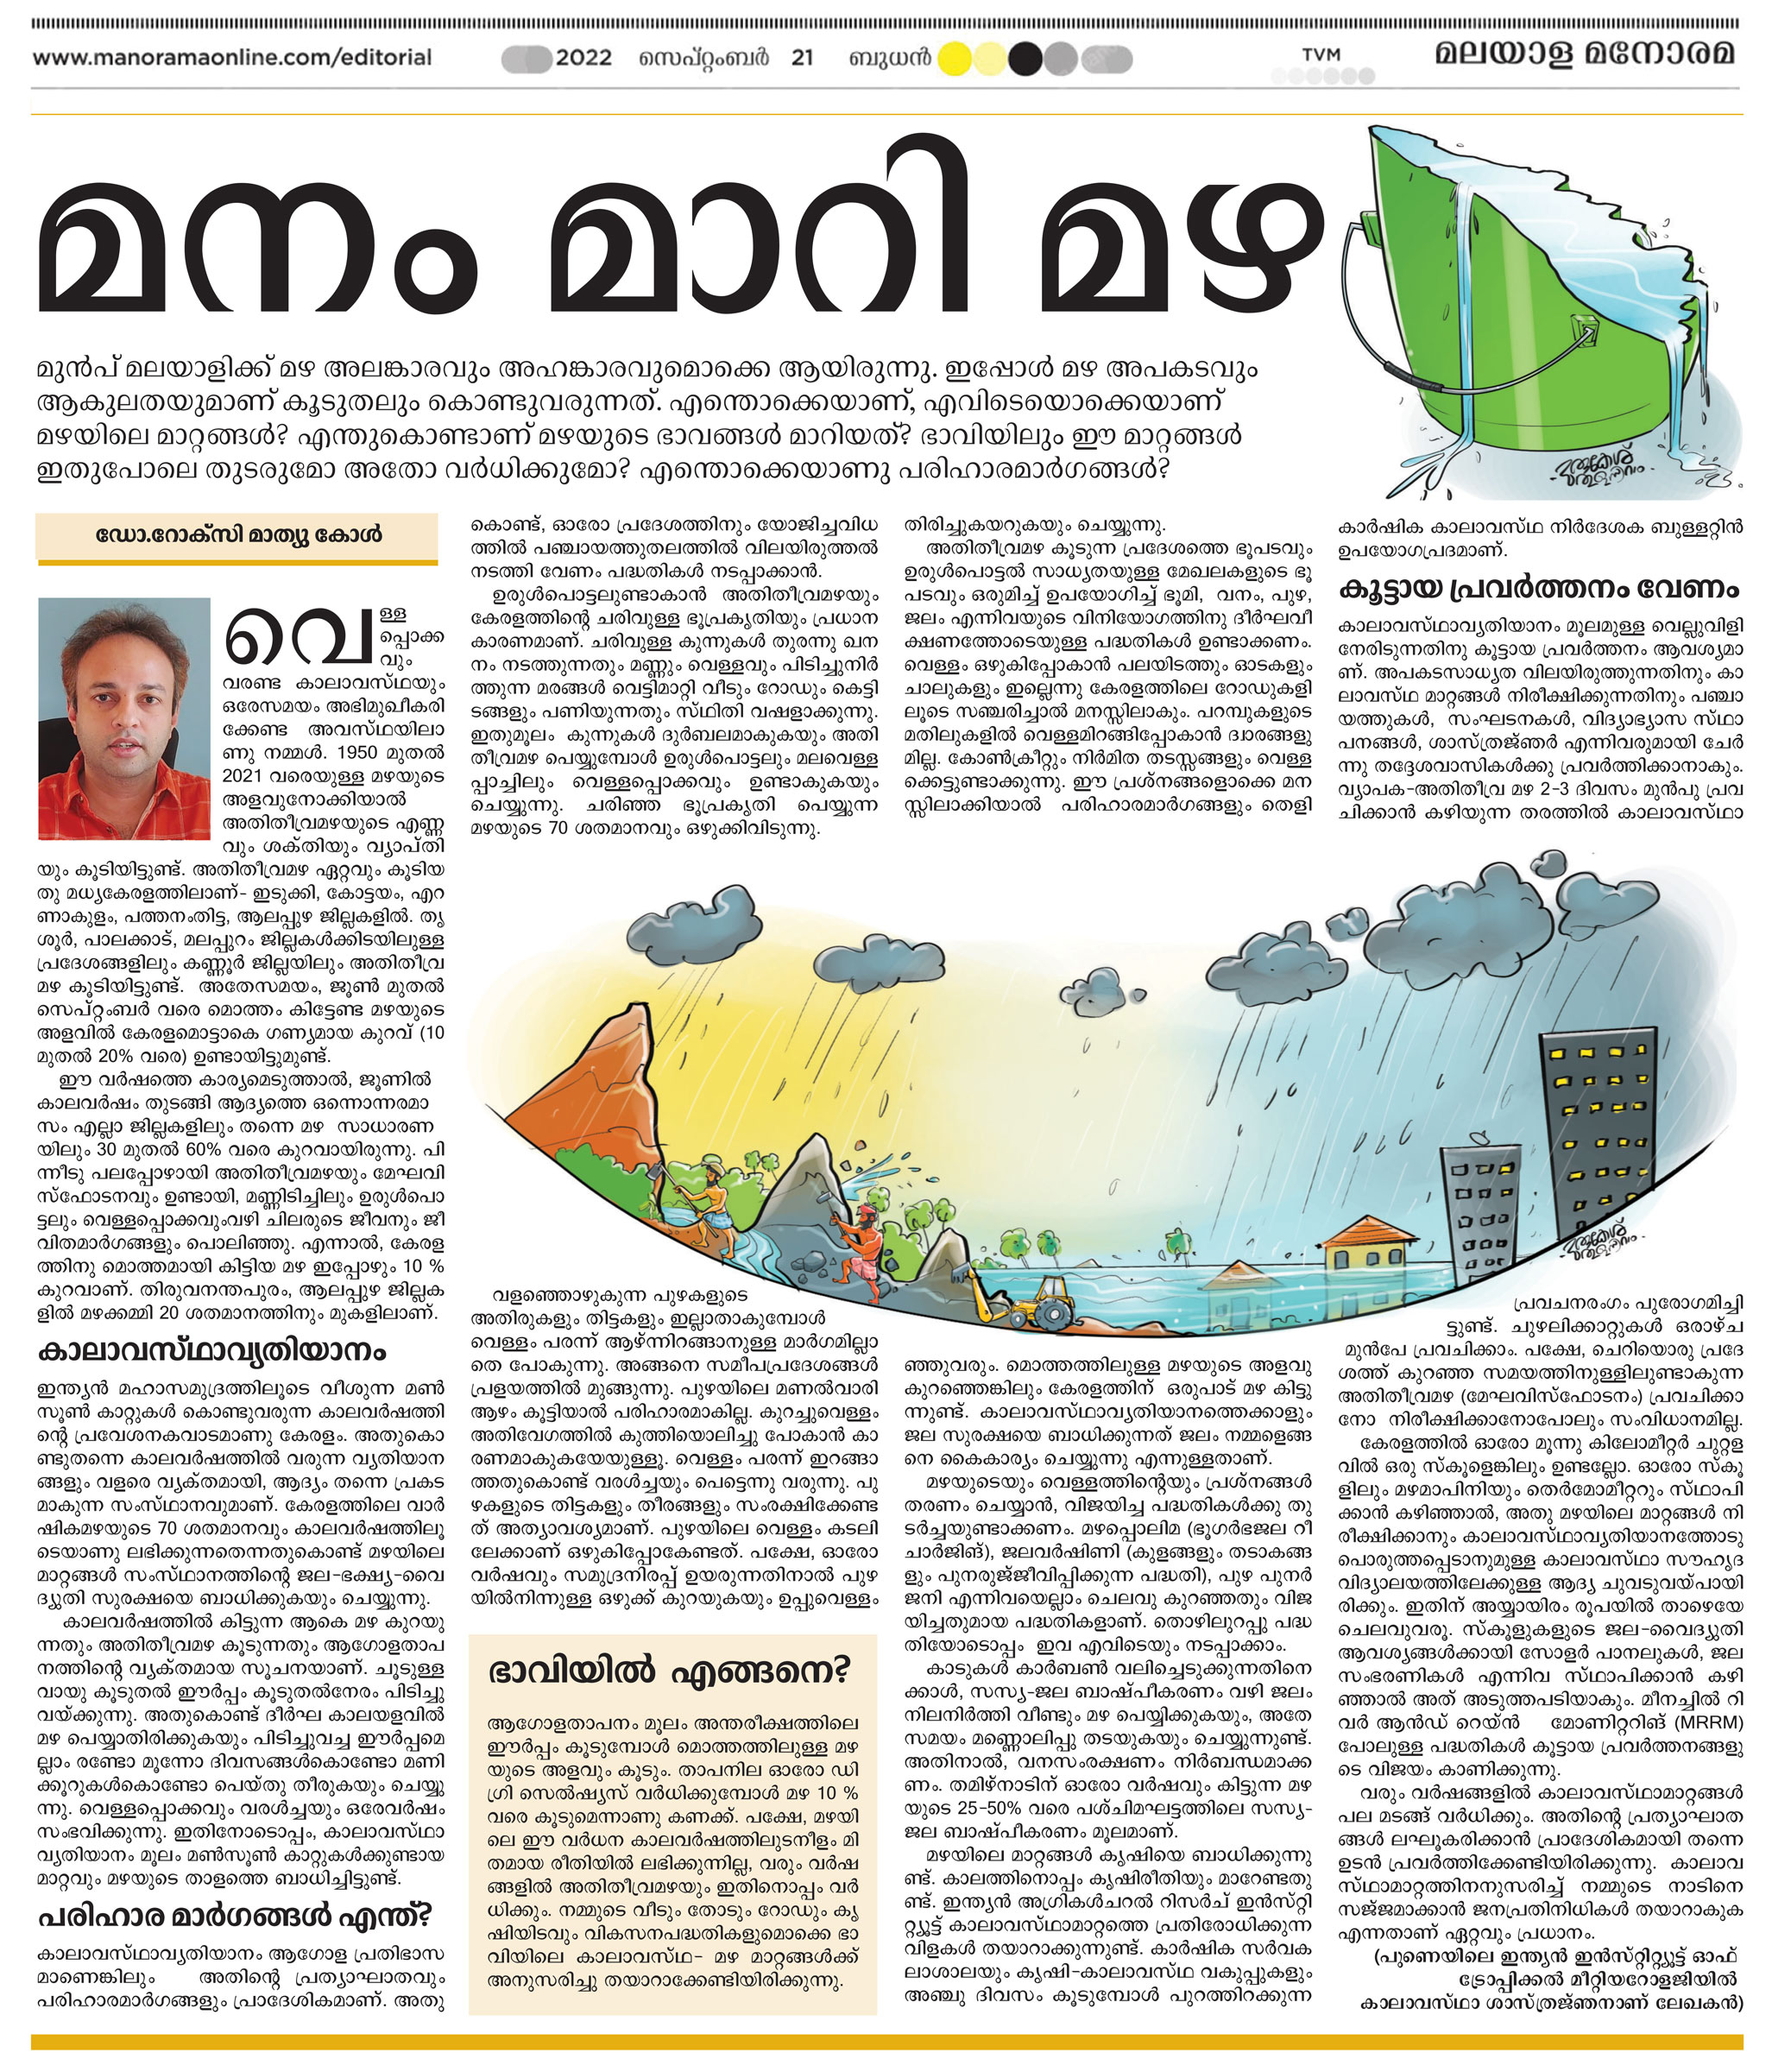 Malayala Manorama Editorial on Kerala Rains Floods and Droughts